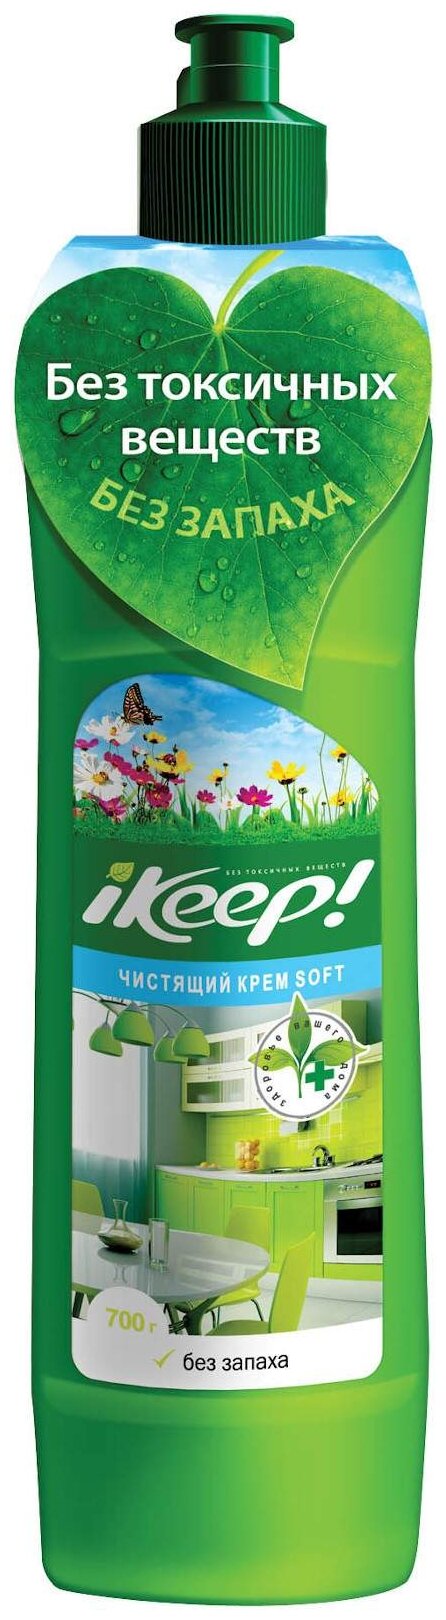 Крем чистящий для кухни iKeep! Soft, 700 мл - фото №1